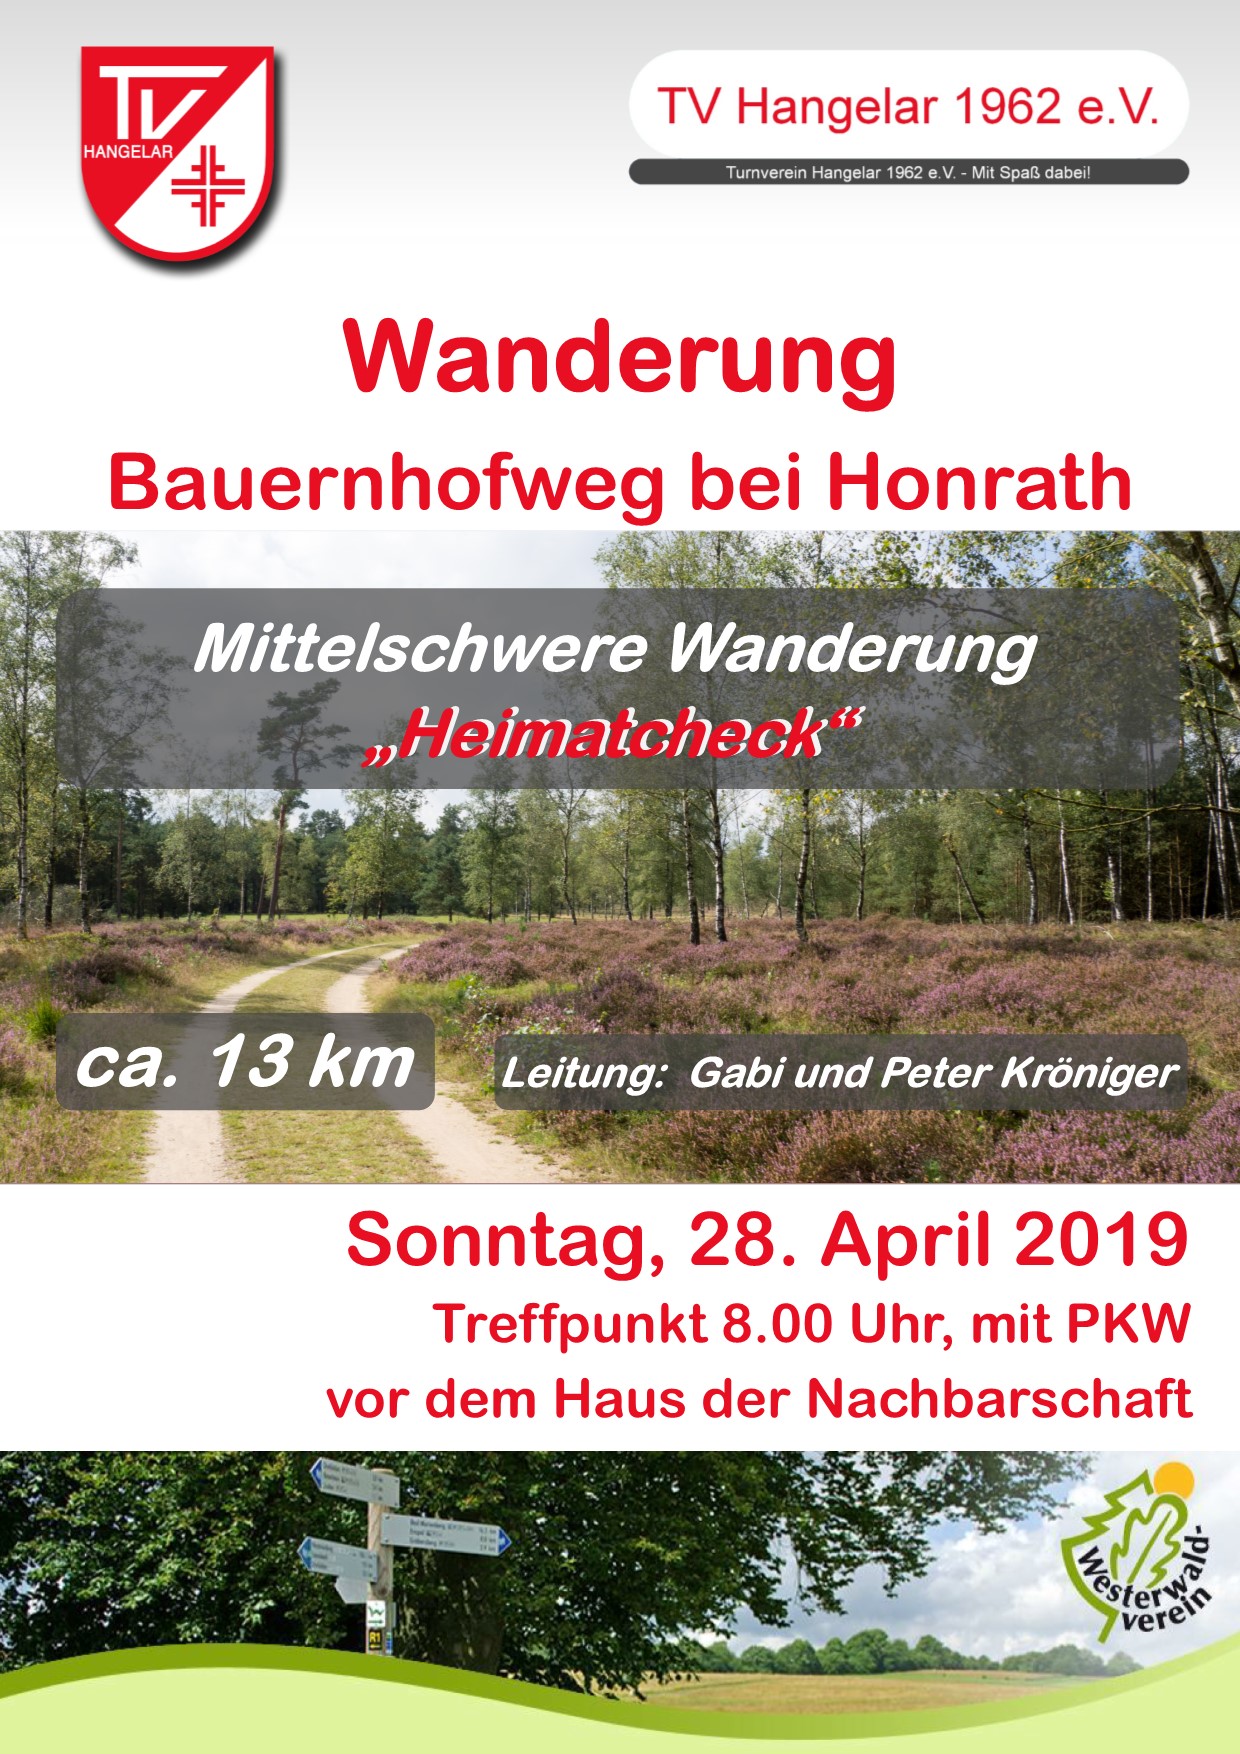 Wanderung 28. April 2019 Honrath